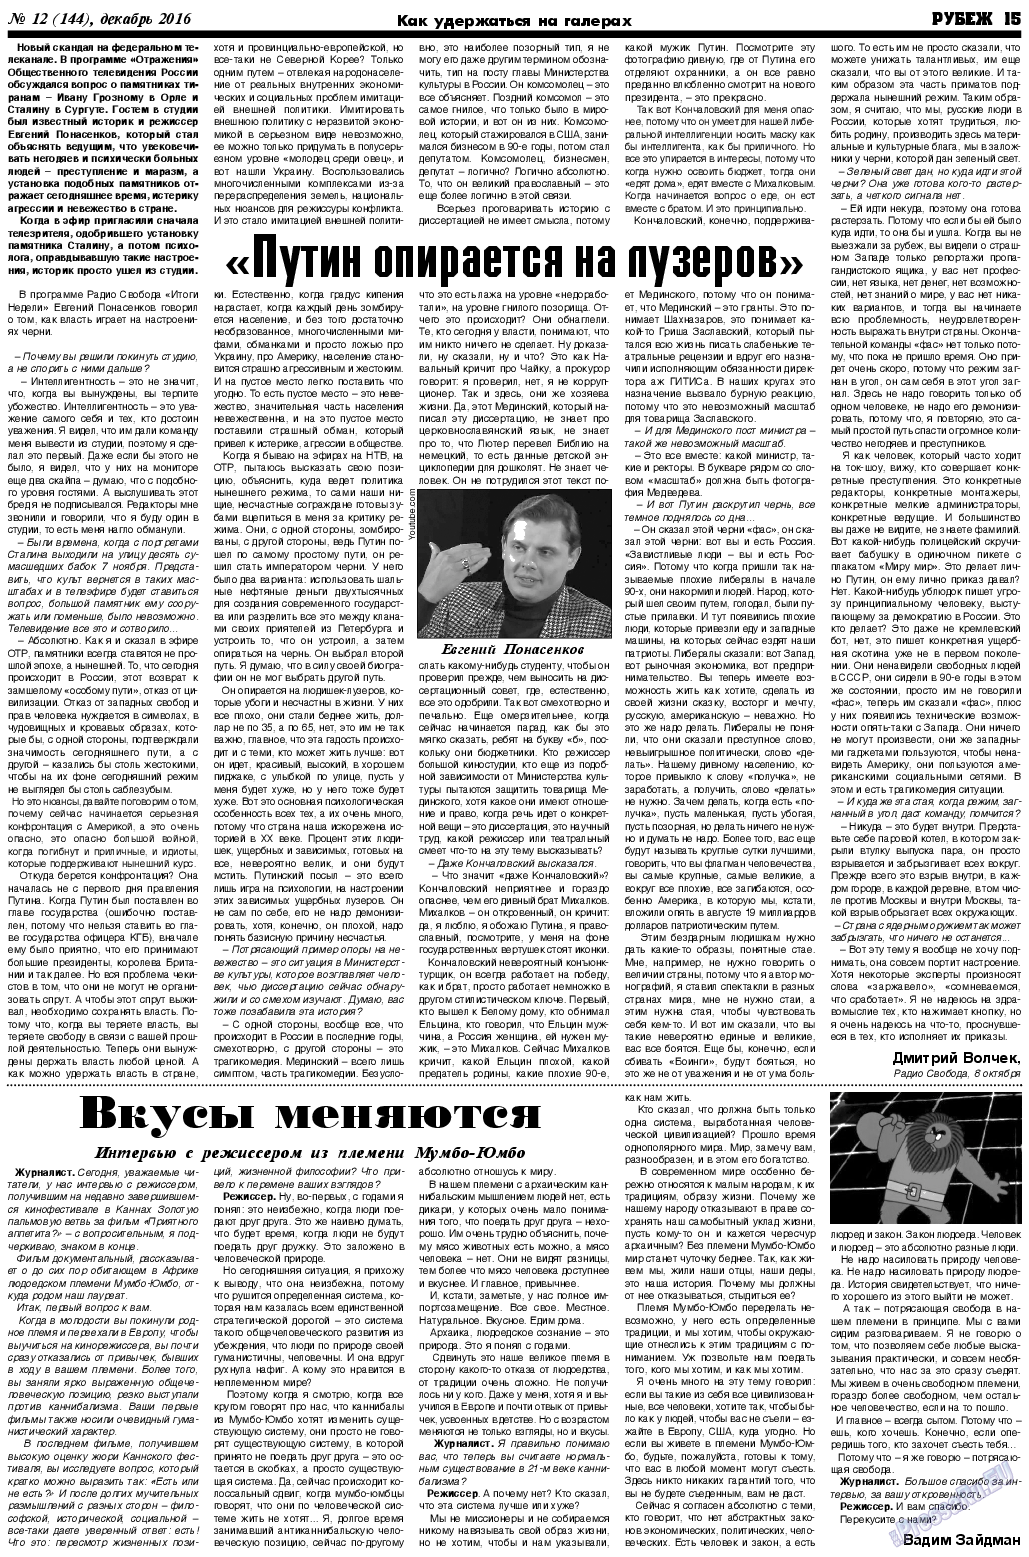 Рубеж, газета. 2016 №12 стр.15